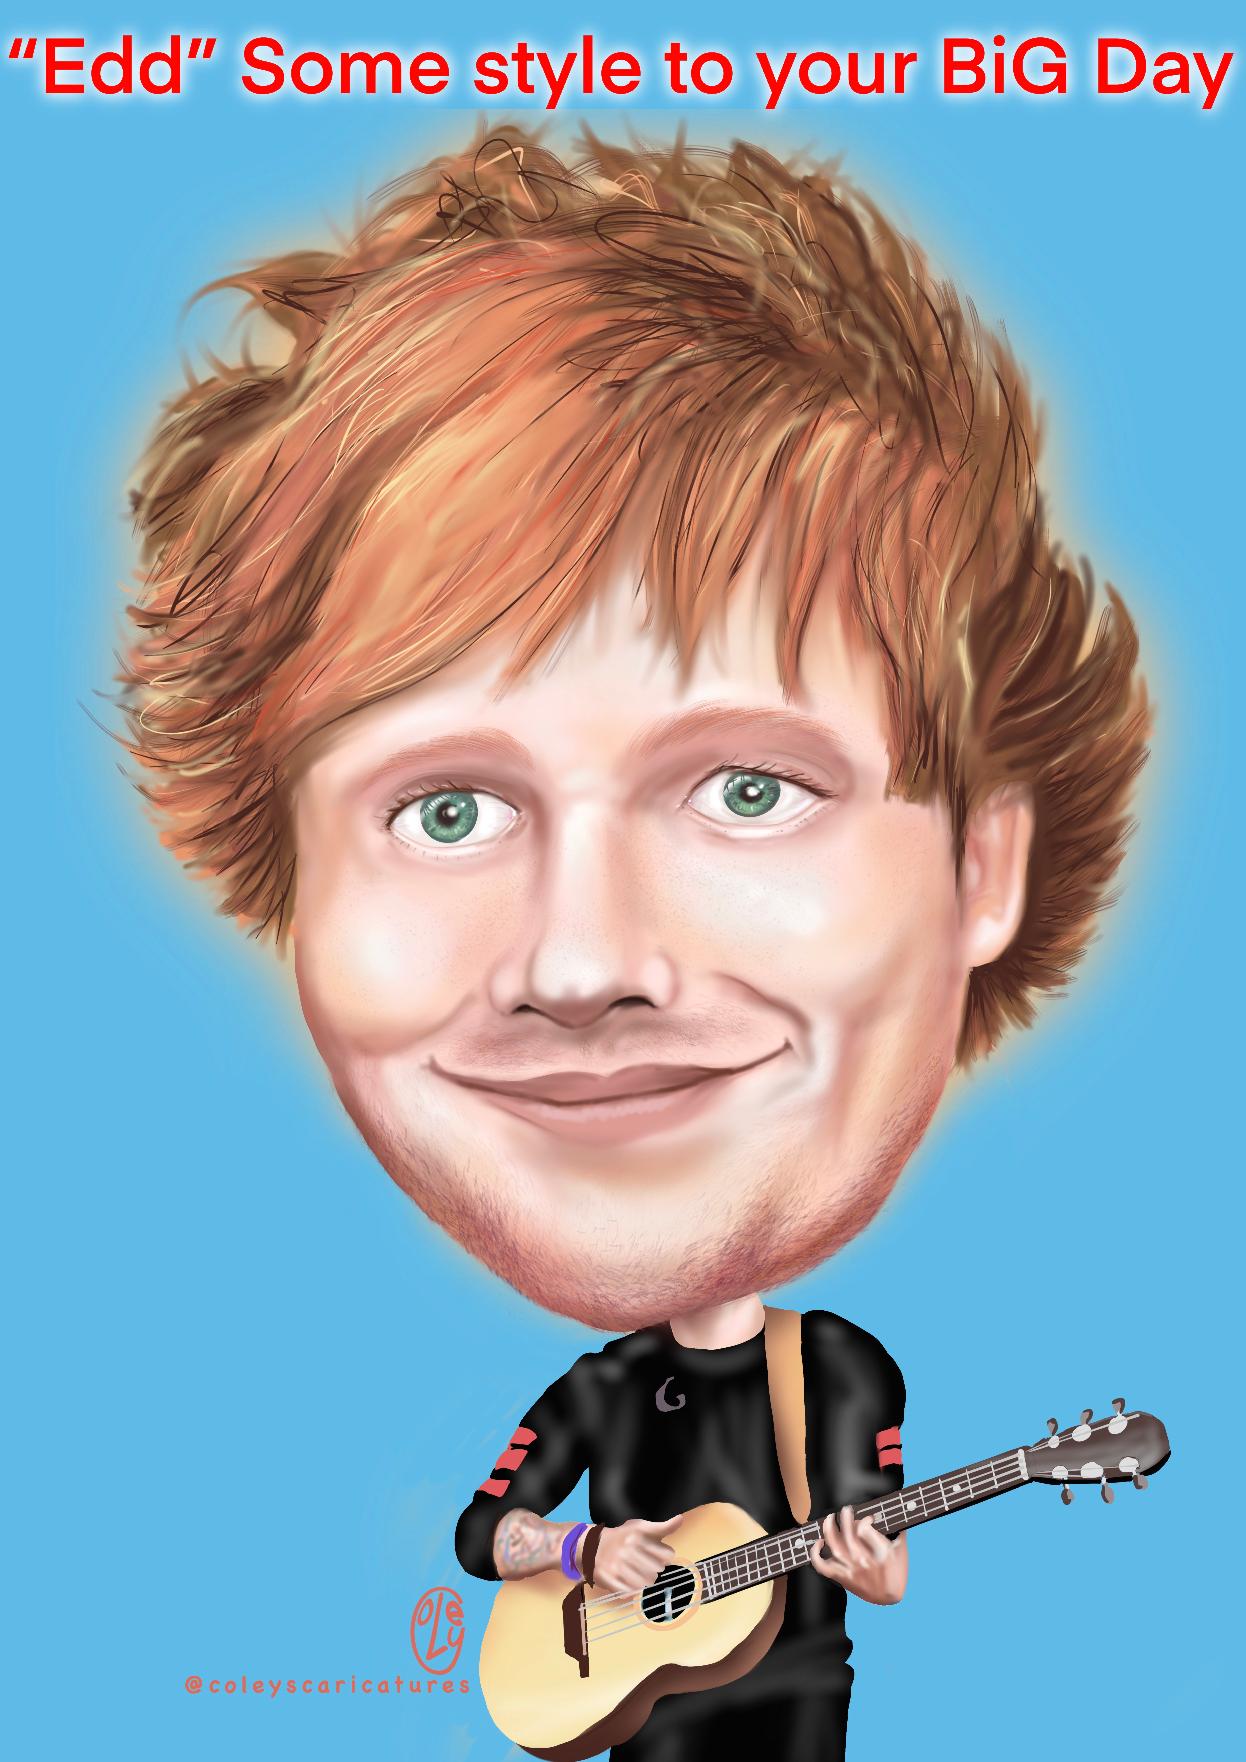 Edd Sheeran caricature entertainment 